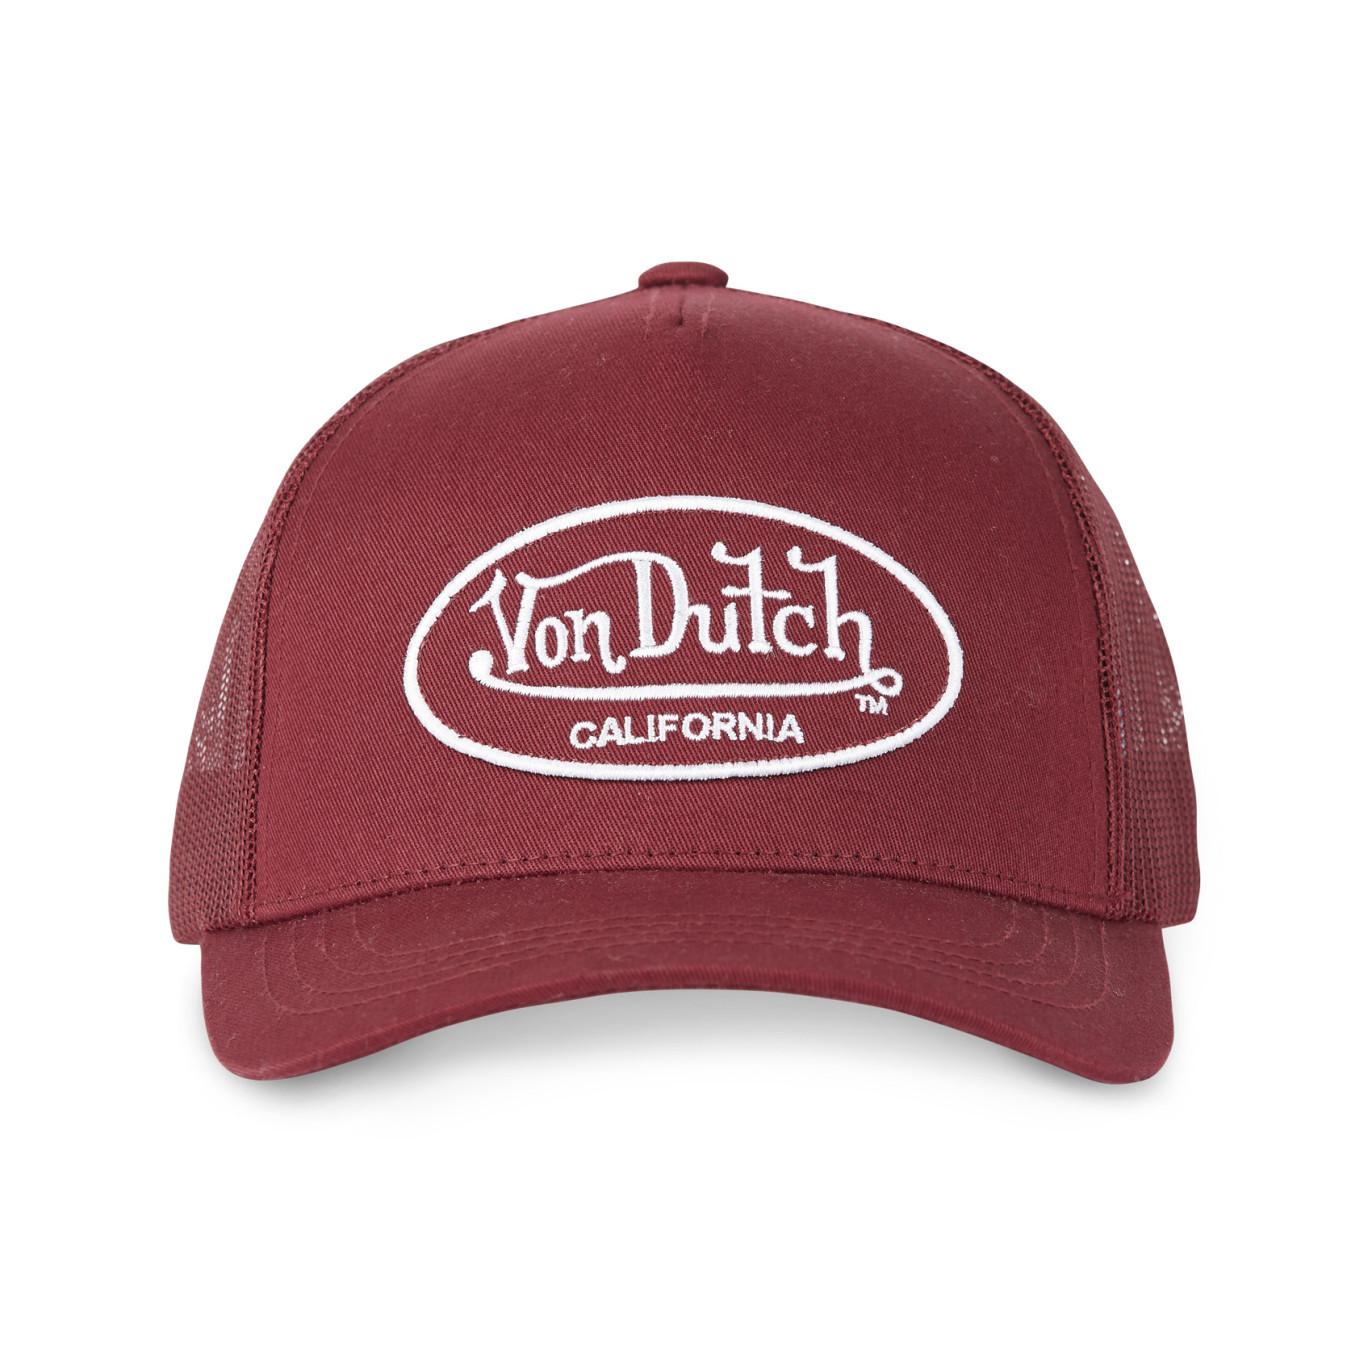 Casquette baseball avec fermeture snapback Vondutch en coton - Von Dutch